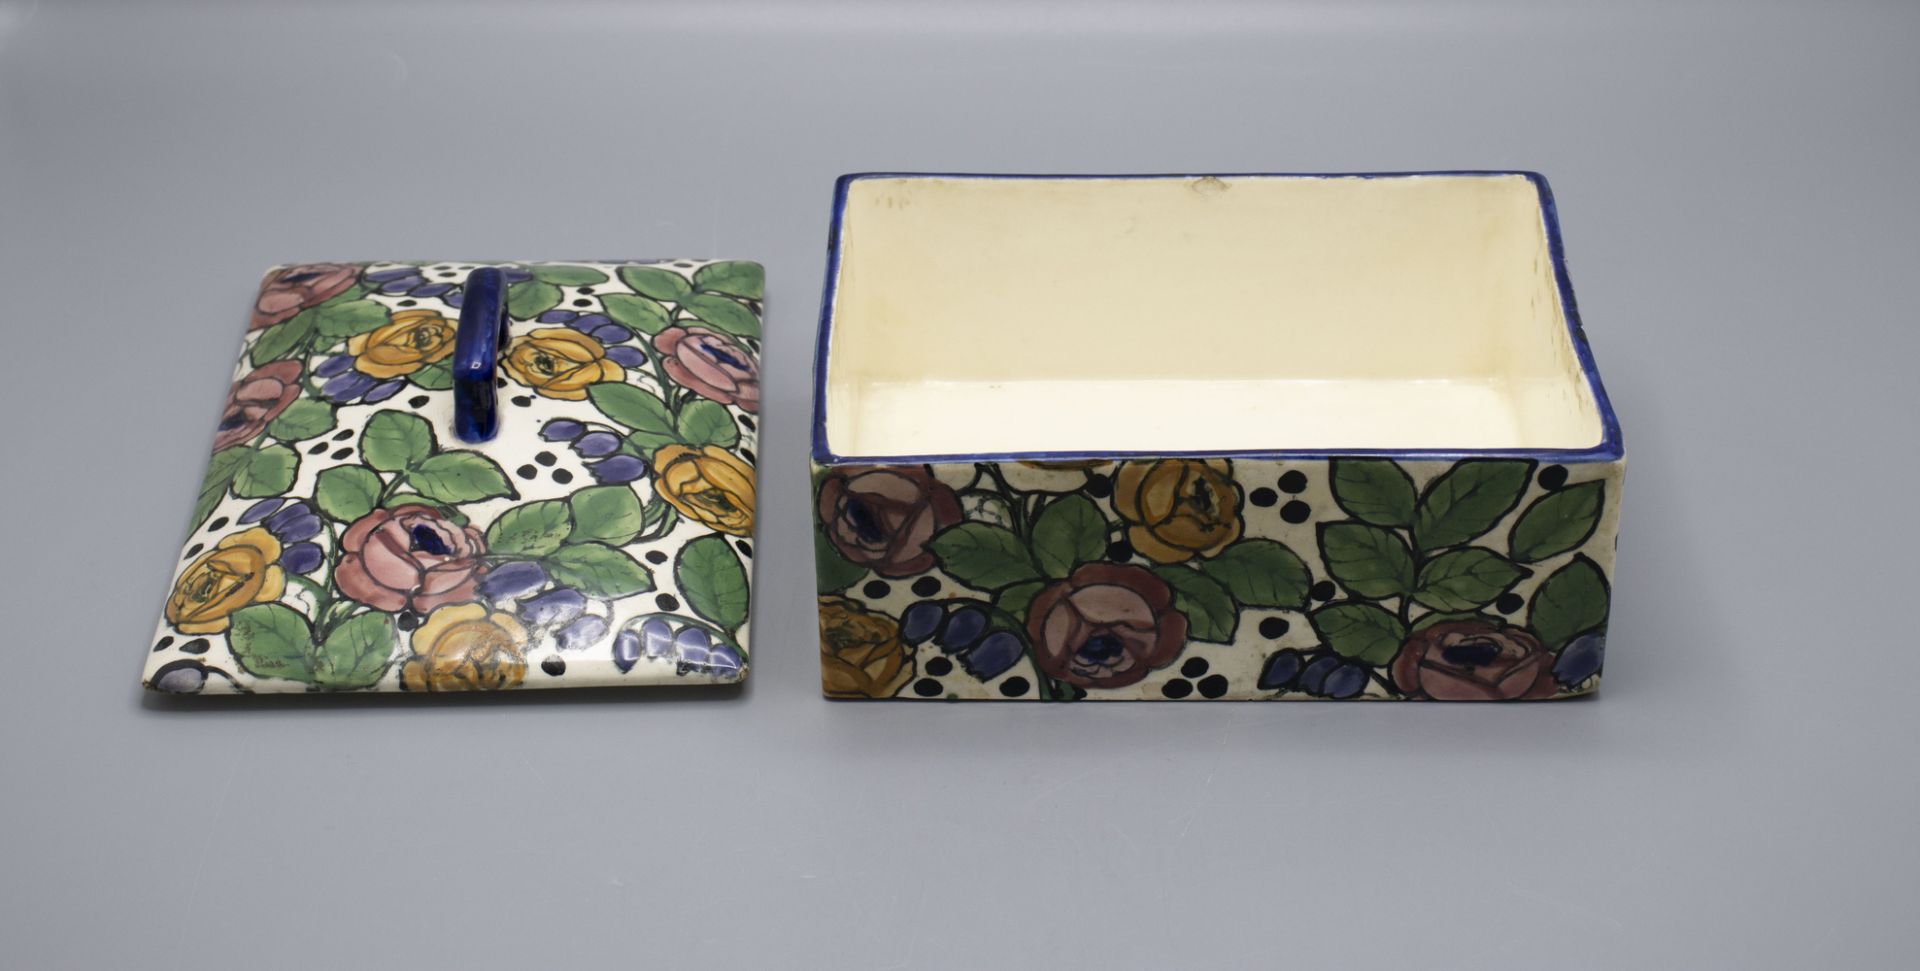 Keramik Deckeldose / A ceramic lidded box, um 1900 - Image 3 of 4